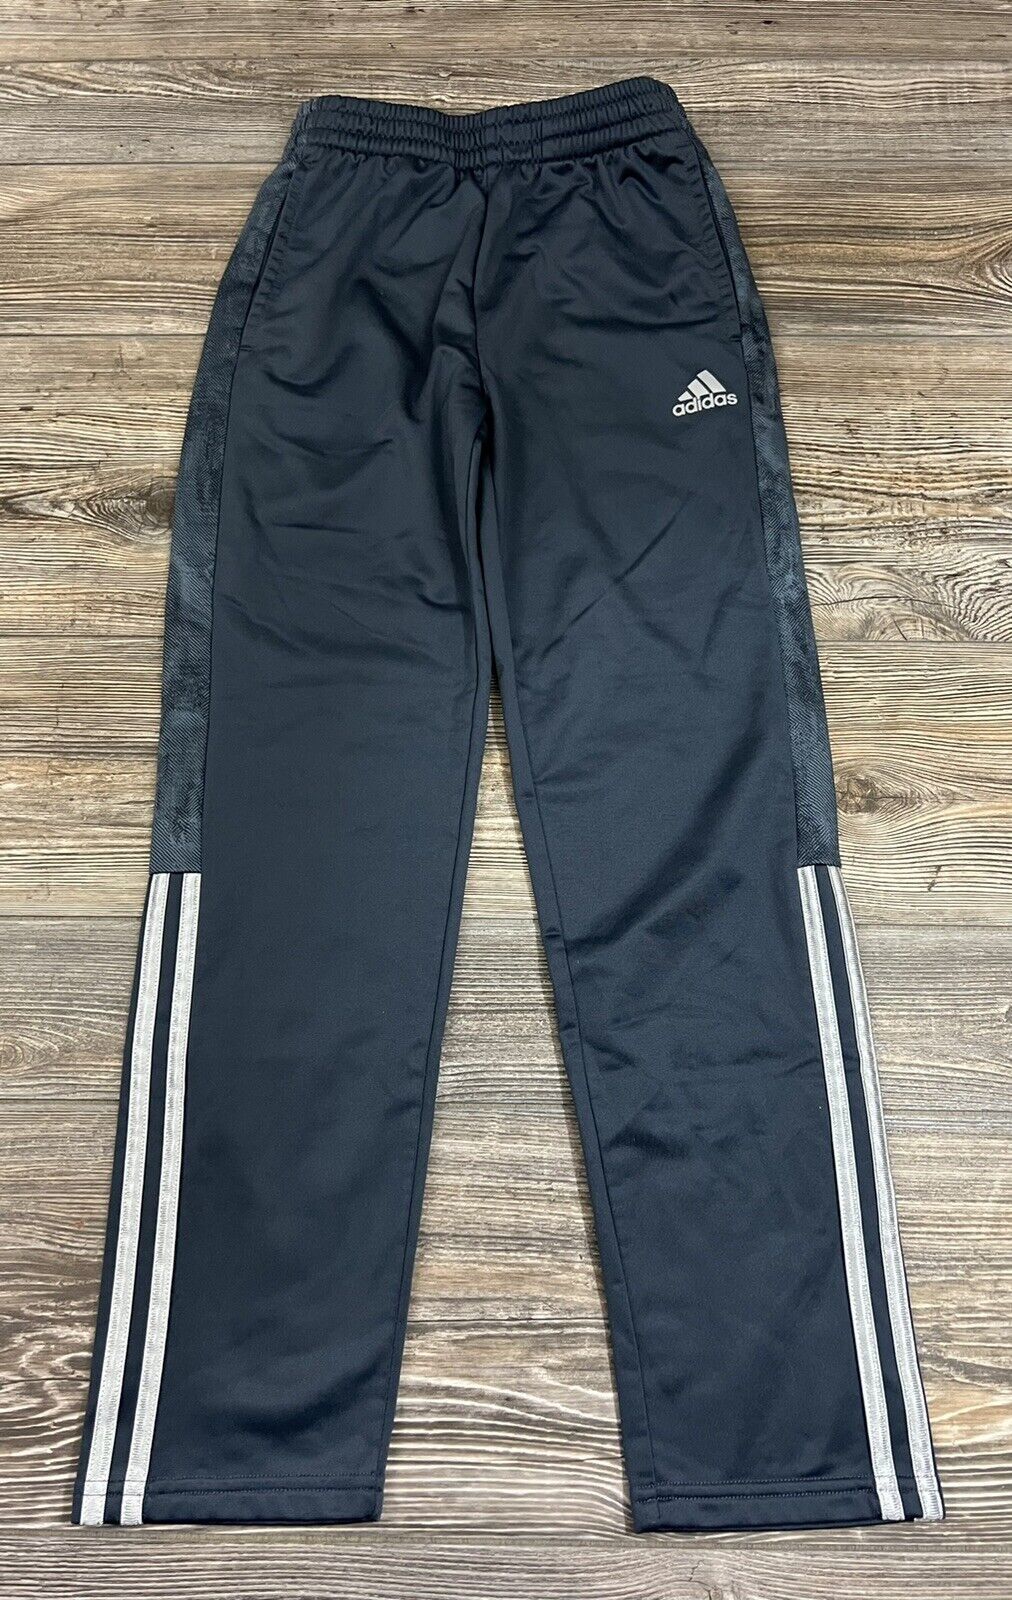 Adidas Youth Boy's Track Pants Size 10/12 M Grey, Drawstring, Pockets, #AK5592 - $17.82